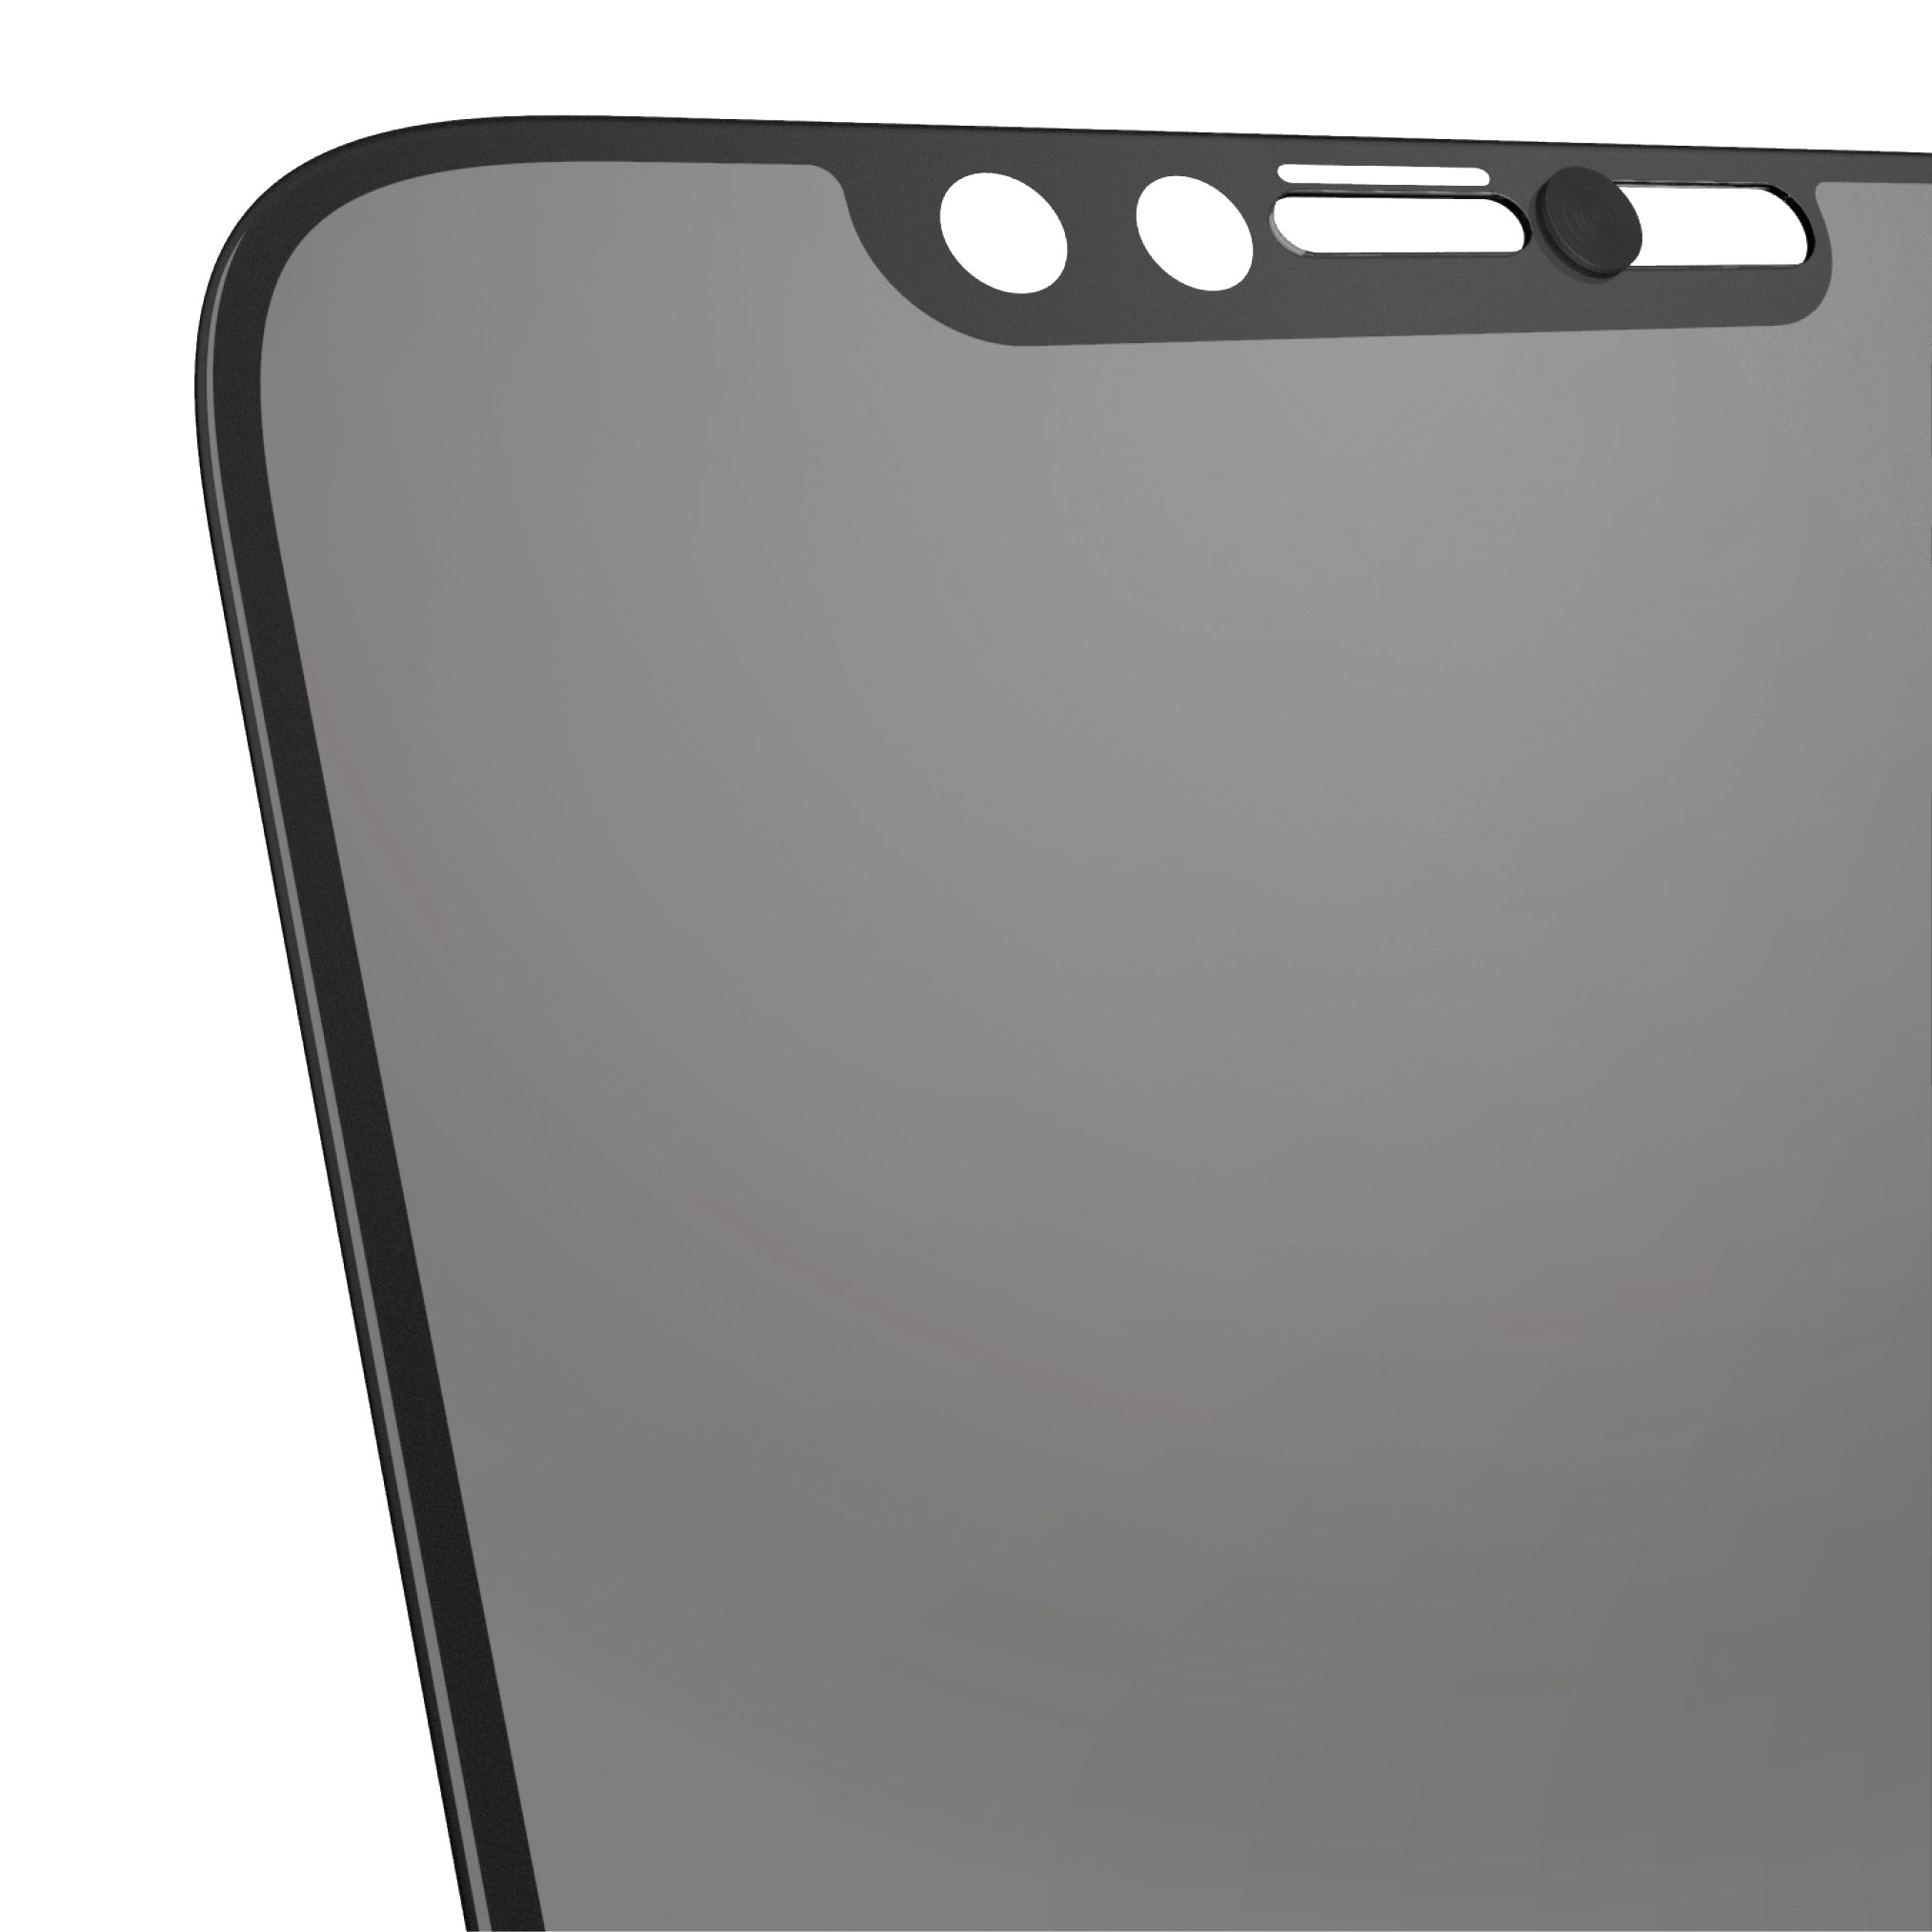 Gehärtetes Glas PanzerGlass Case Friendly Edge to Edge Dual Privacy Cam Slider